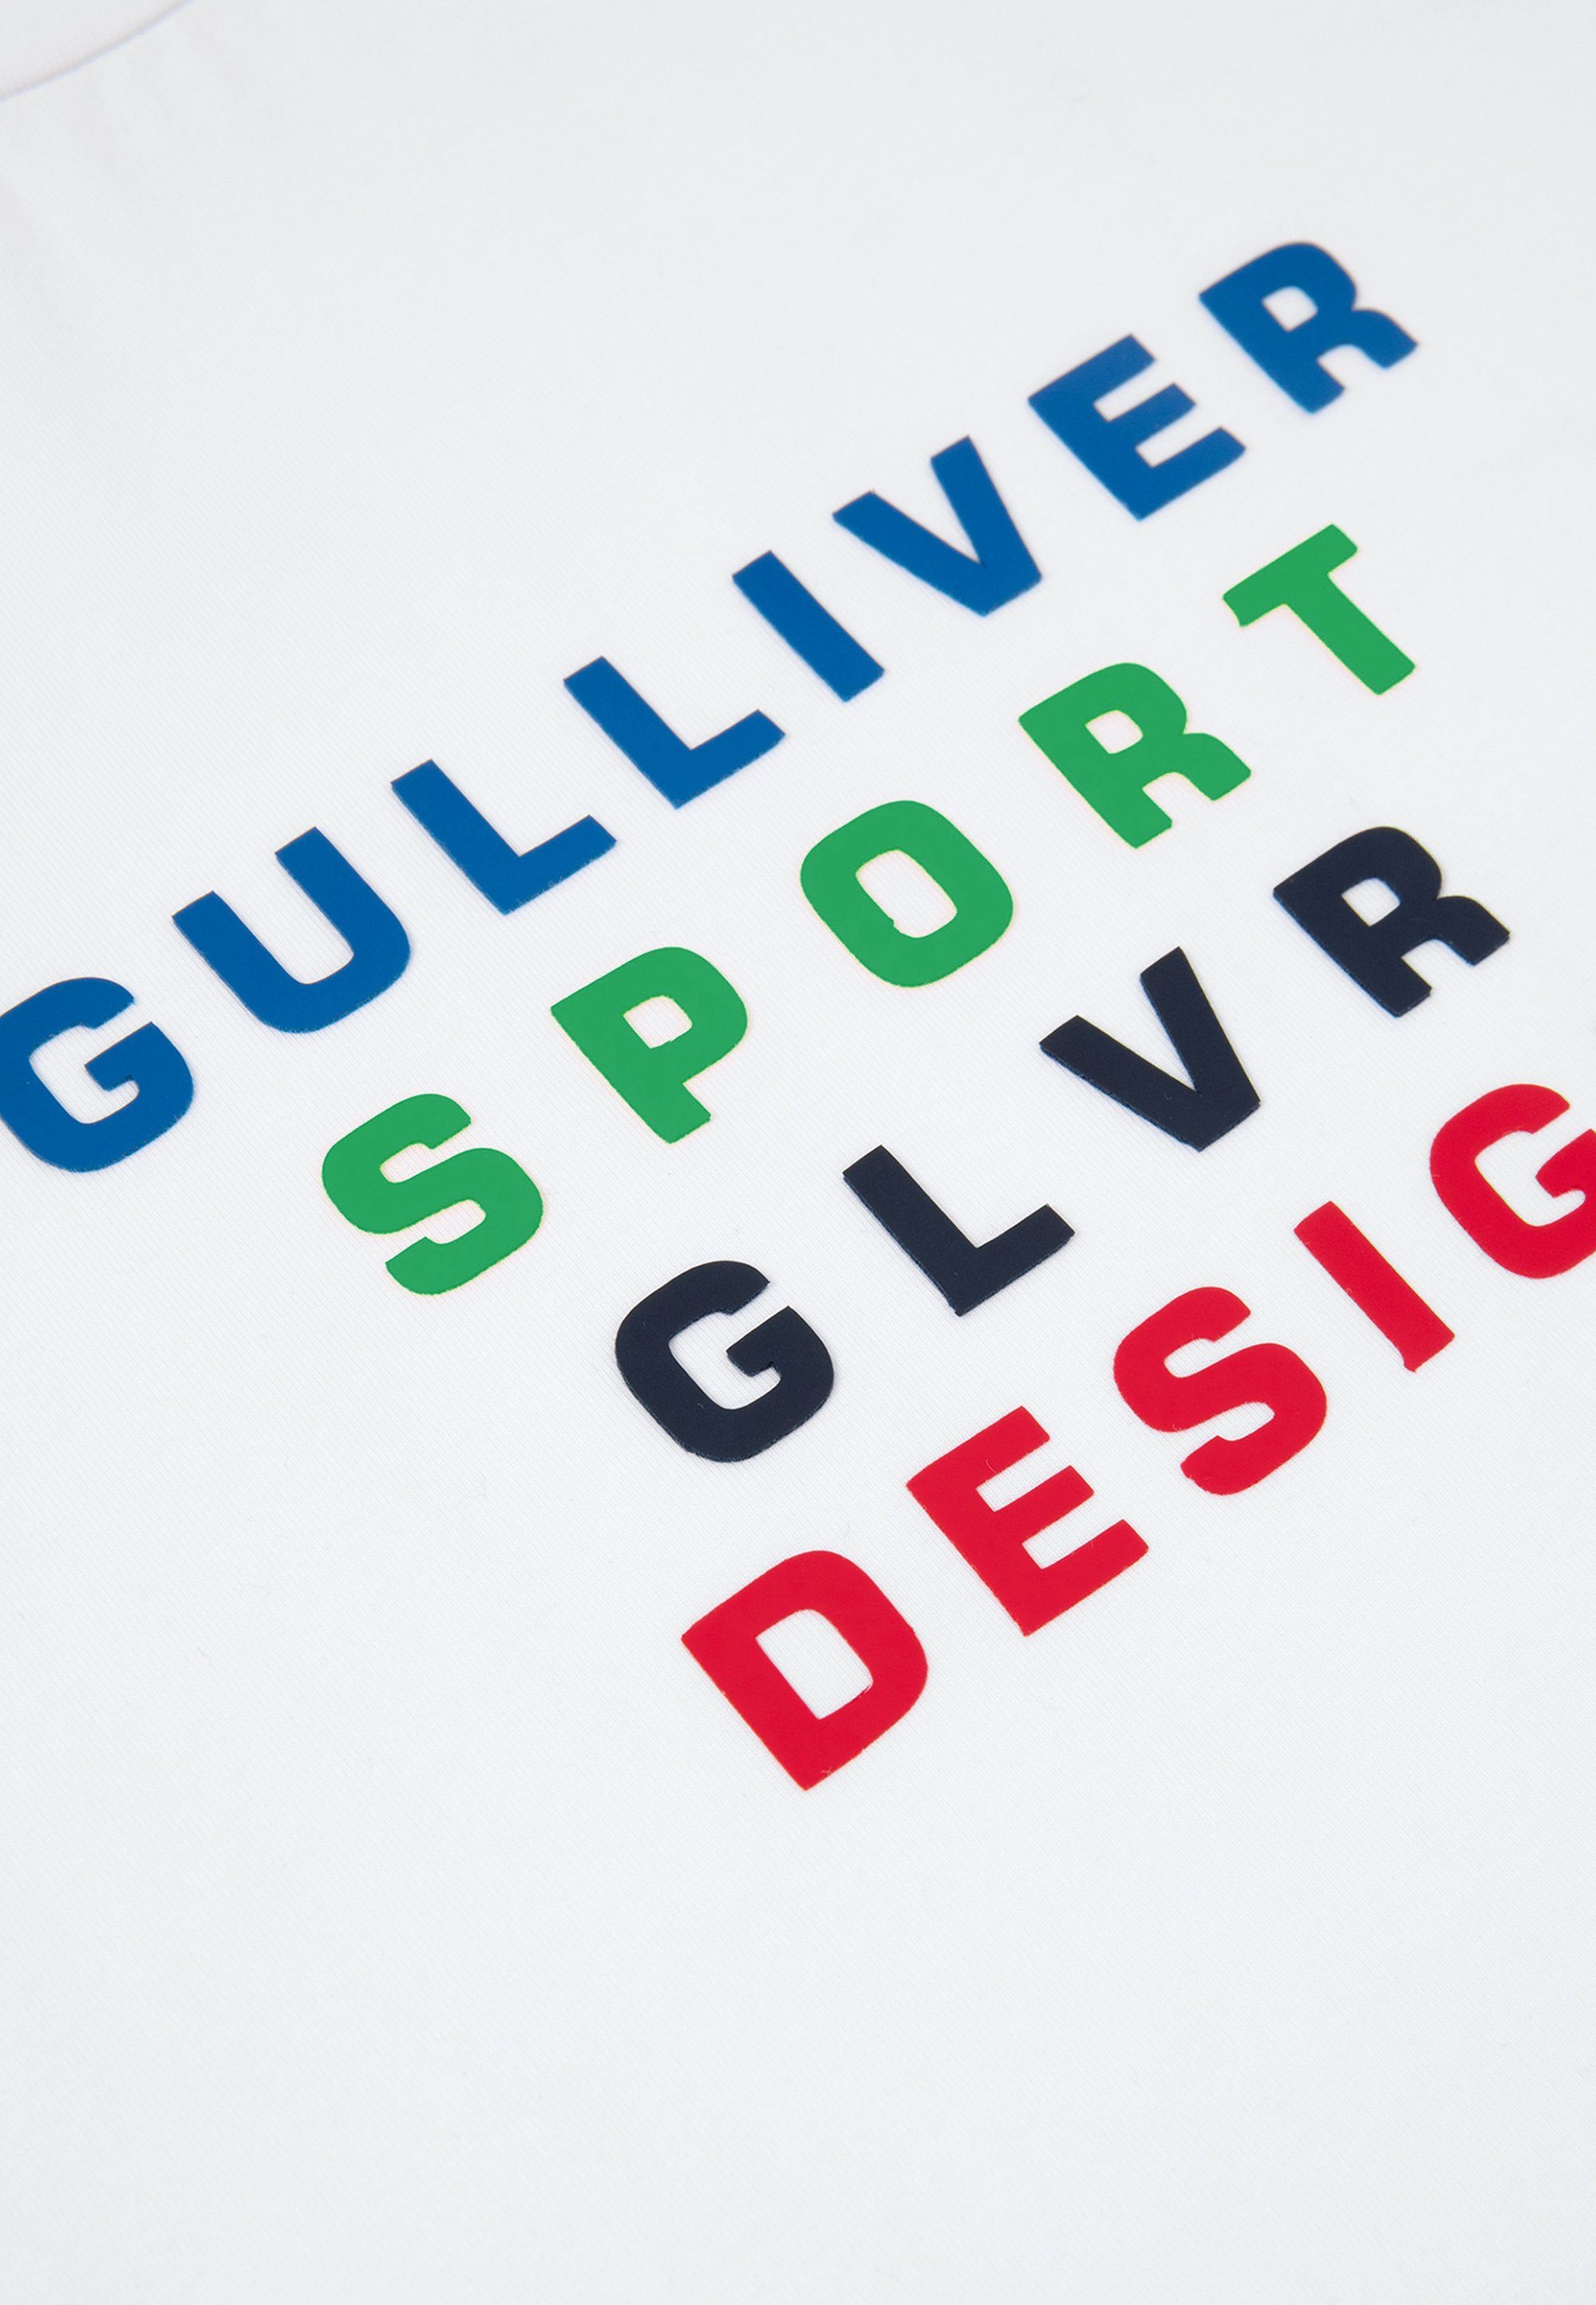 Gulliver Frontprint mit T-Shirt buntem